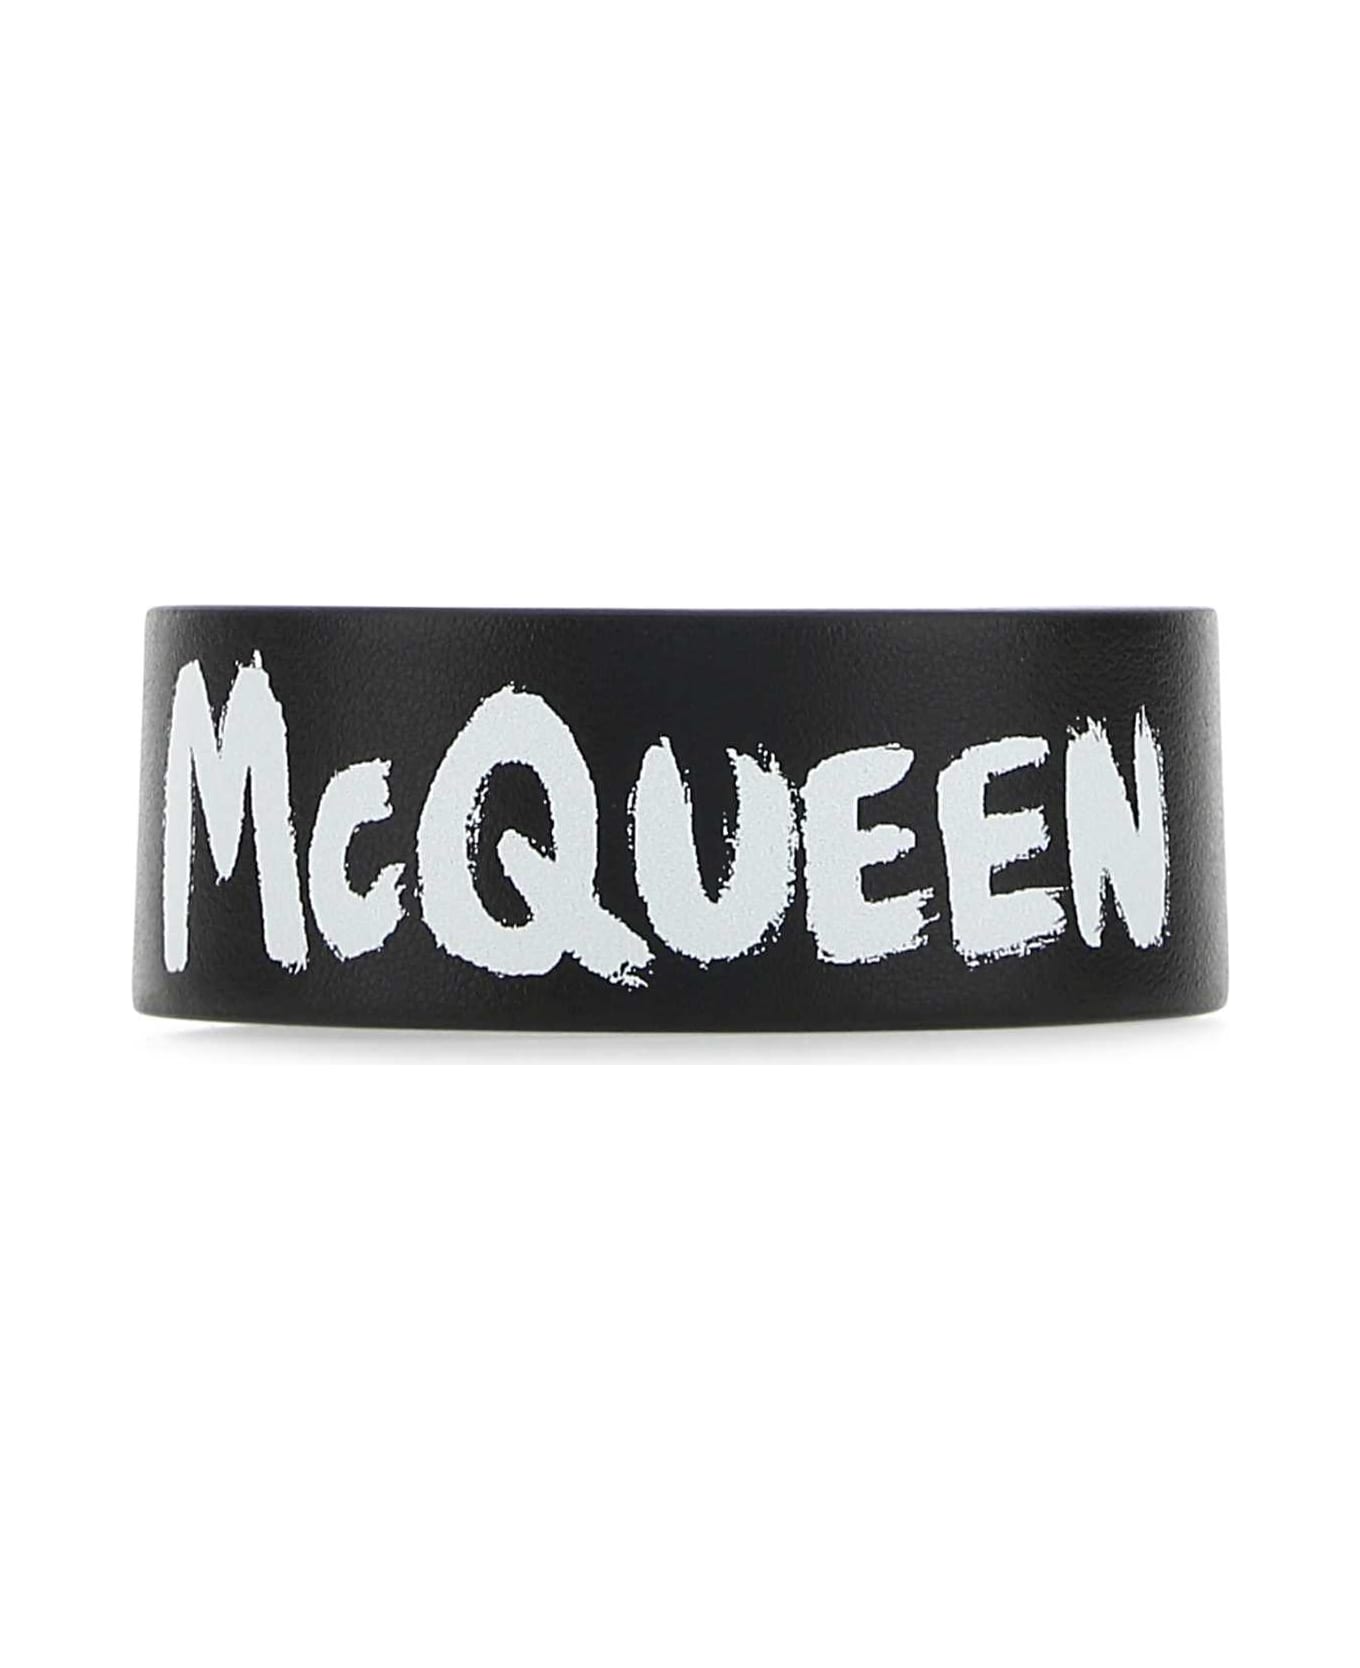 Alexander McQueen Black Leather Bracelet - 1070 ブレスレット